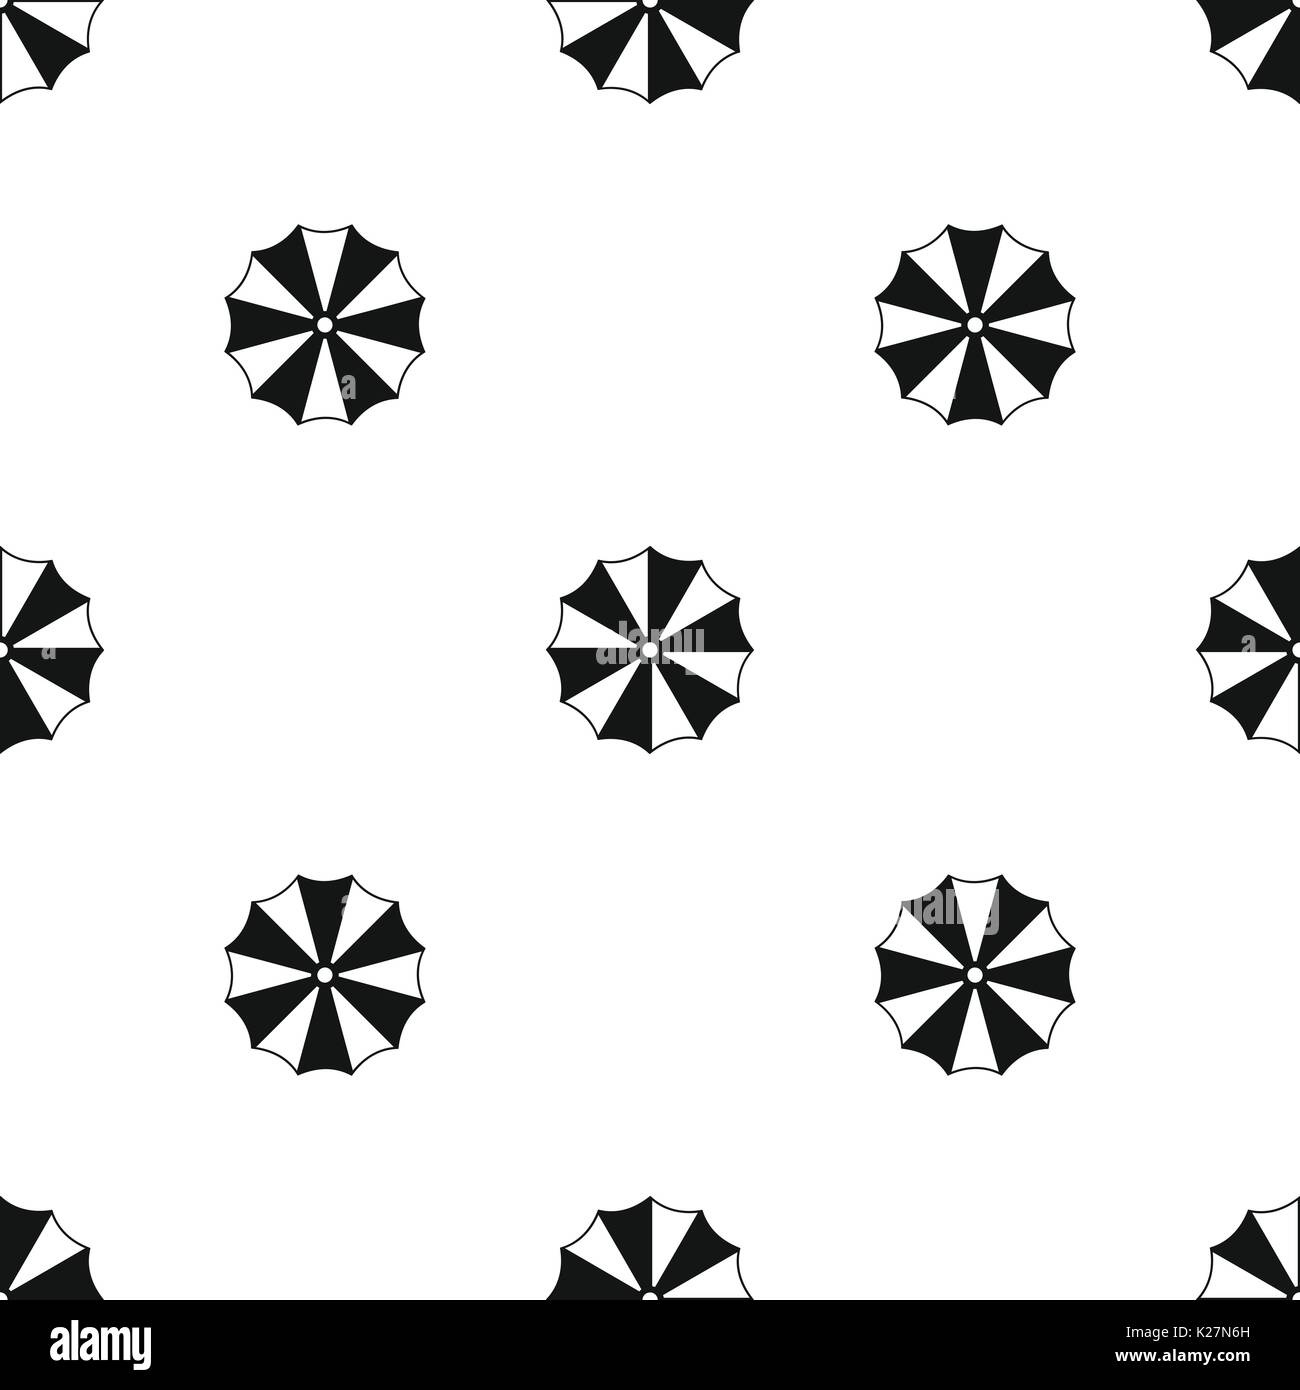 Striped umbrella pattern seamless black Stock Vector